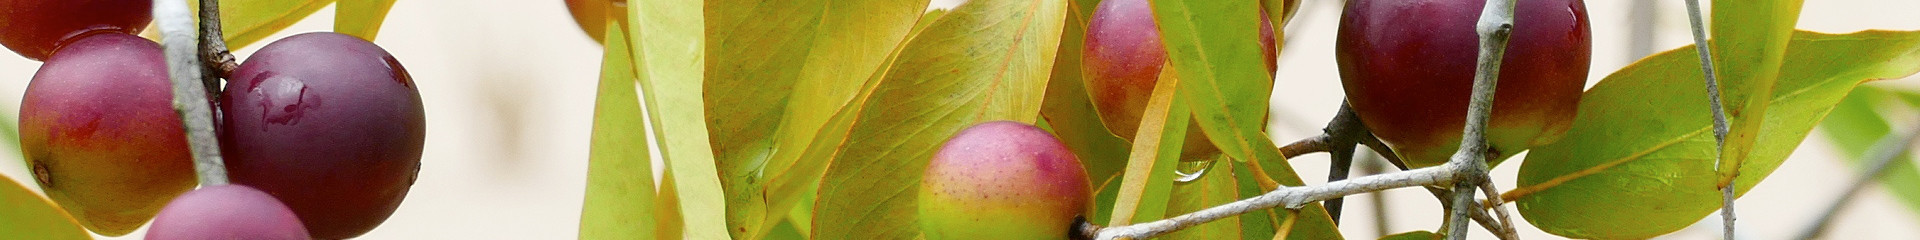 Camu-camu Bio d’Amazonie : le fruit champion de la vitamine C | Bioénergies